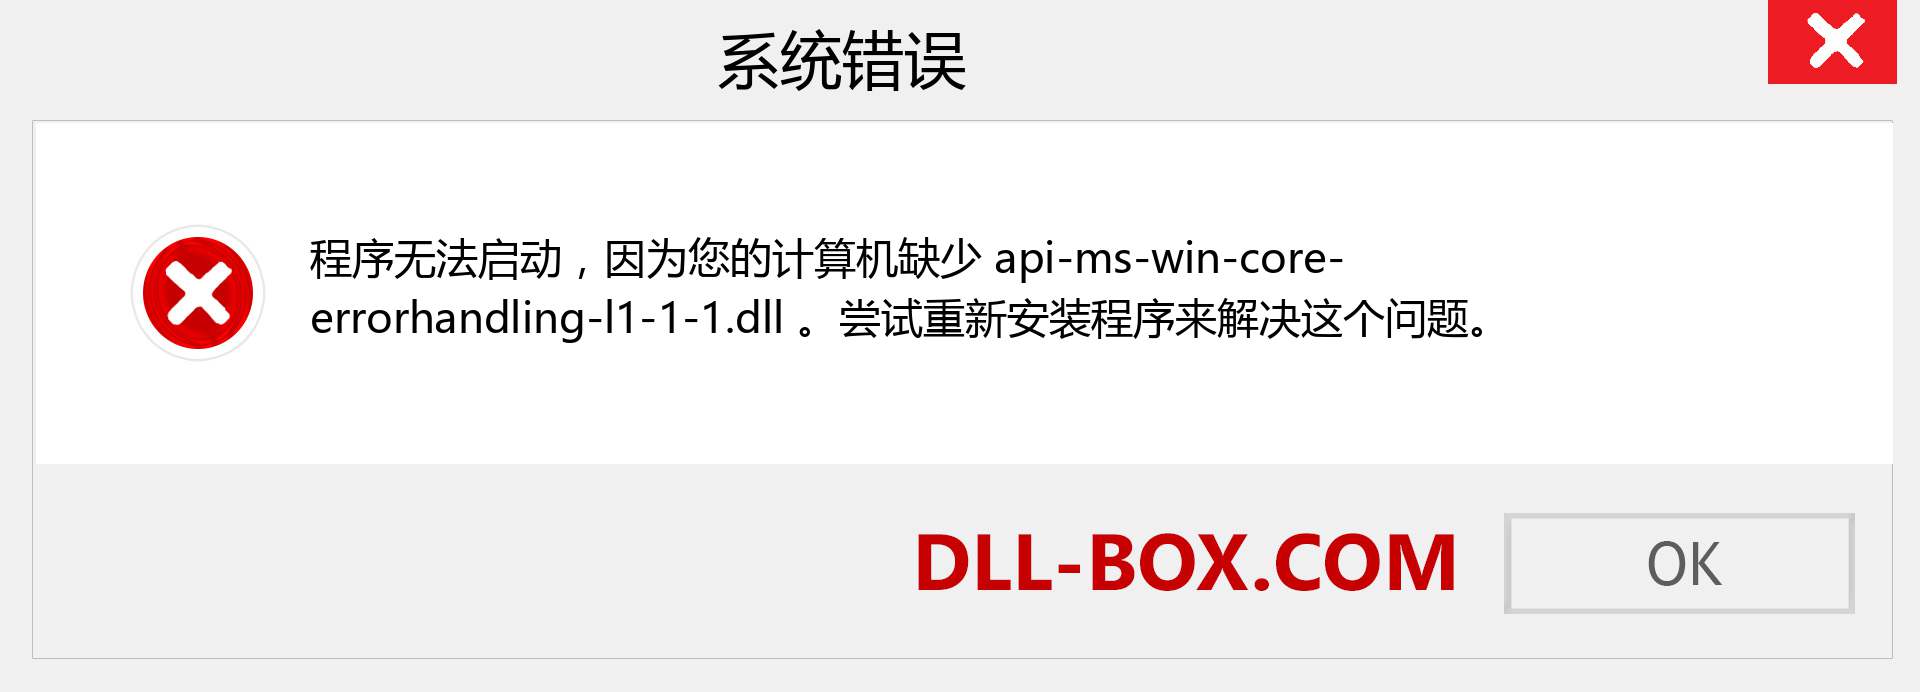 api-ms-win-core-errorhandling-l1-1-1.dll 文件丢失？。 适用于 Windows 7、8、10 的下载 - 修复 Windows、照片、图像上的 api-ms-win-core-errorhandling-l1-1-1 dll 丢失错误